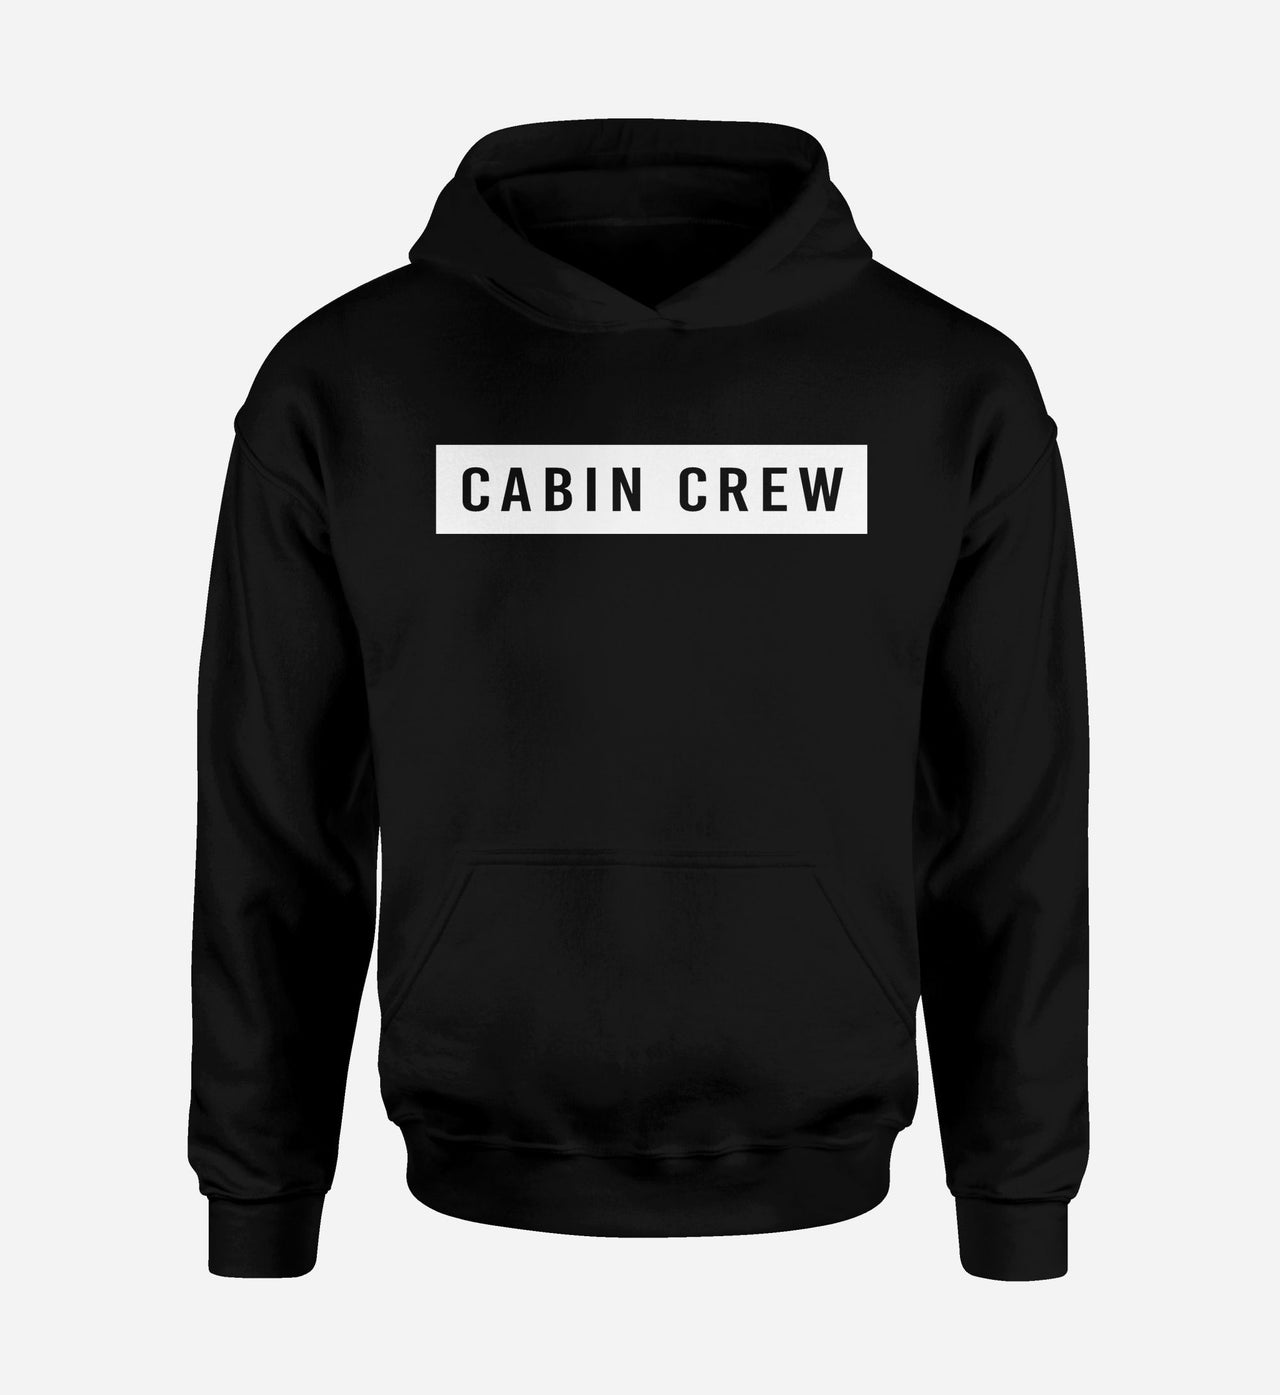 Cabin Crew Text Designed Hoodies